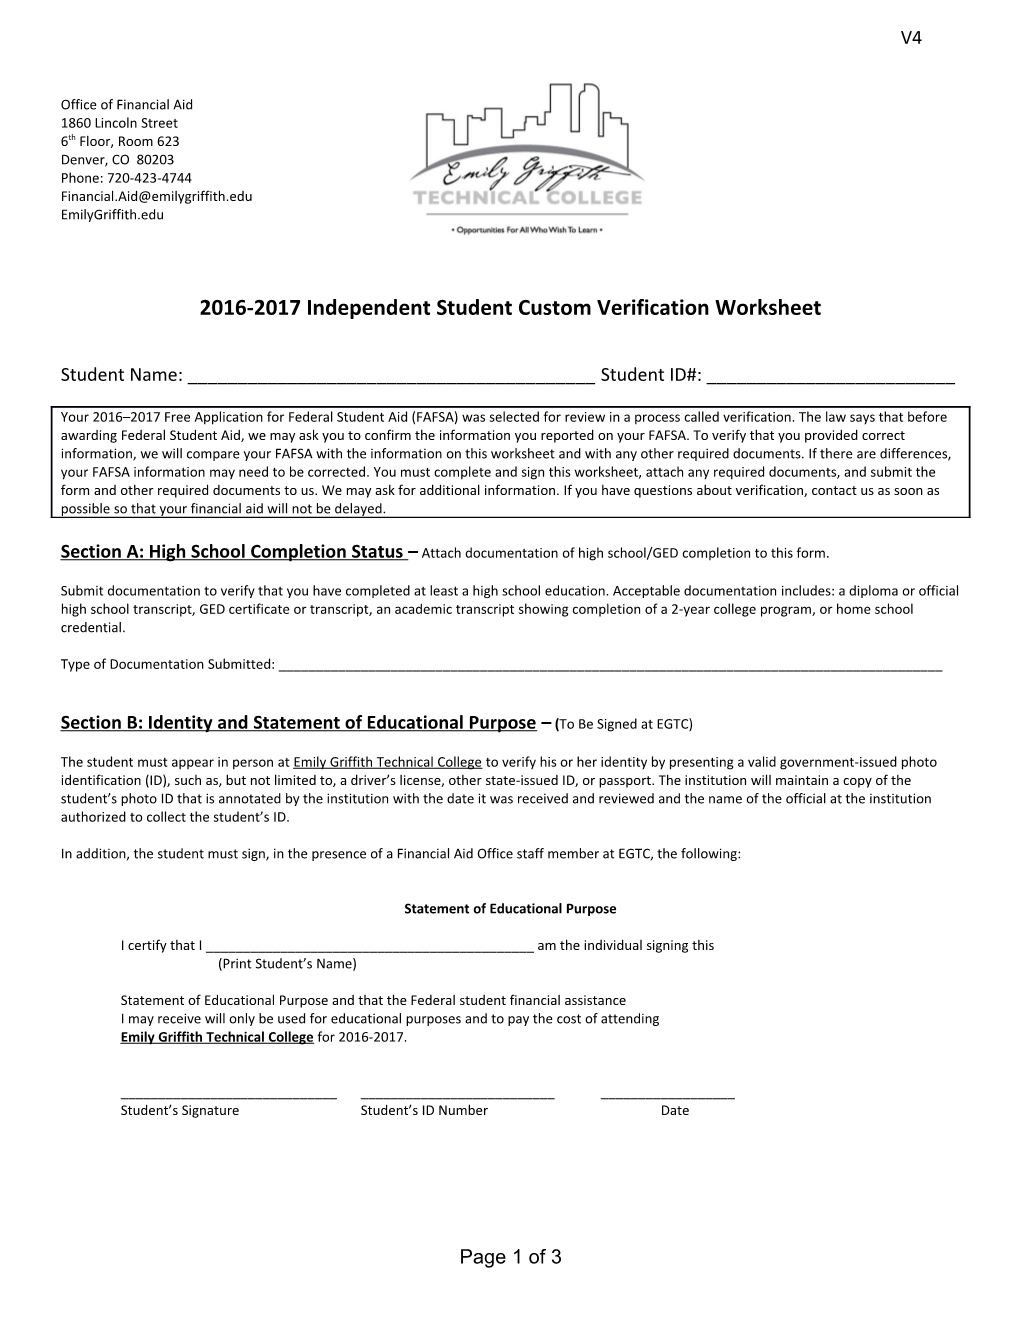 2016-2017Independent Student Custom Verification Worksheet